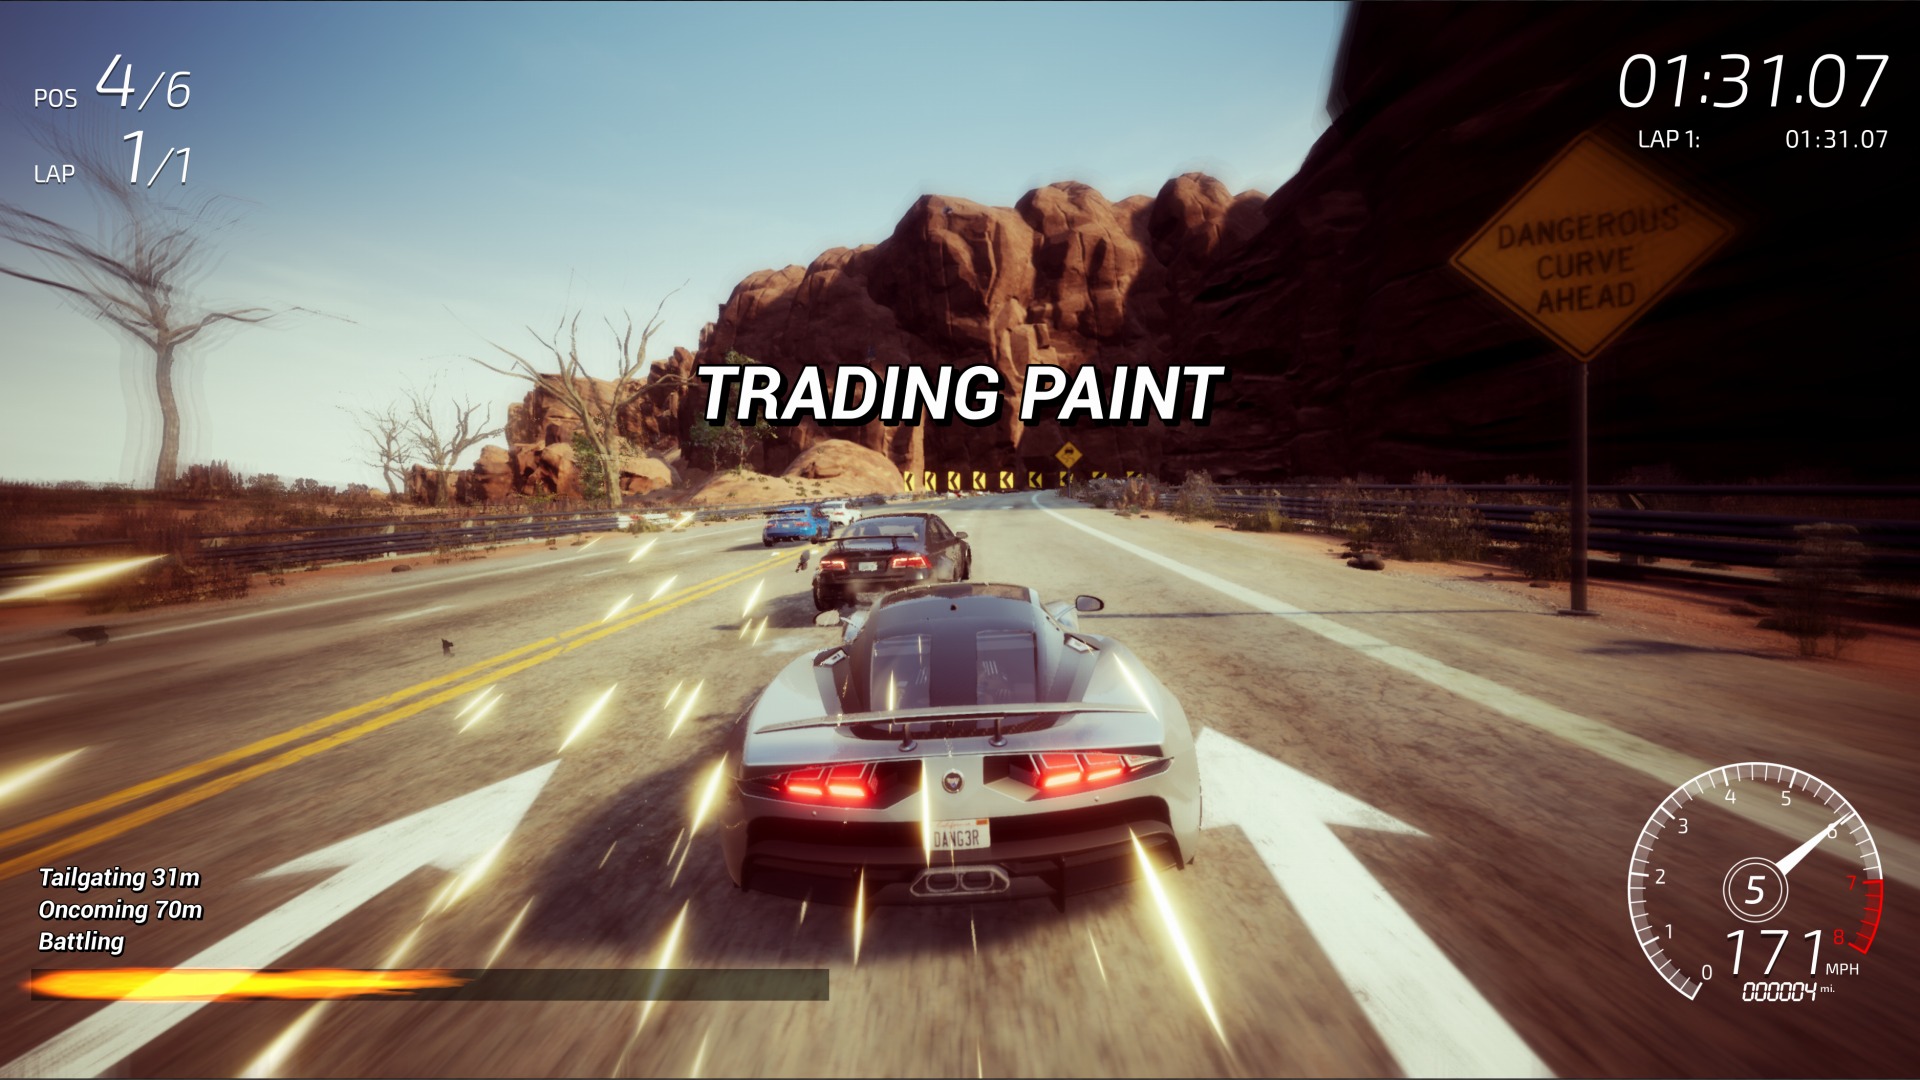 Burnout の魂を受け継ぐ破壊描写たっぷりのレースゲーム Dangerous Driving の発売日が4月9日に決定